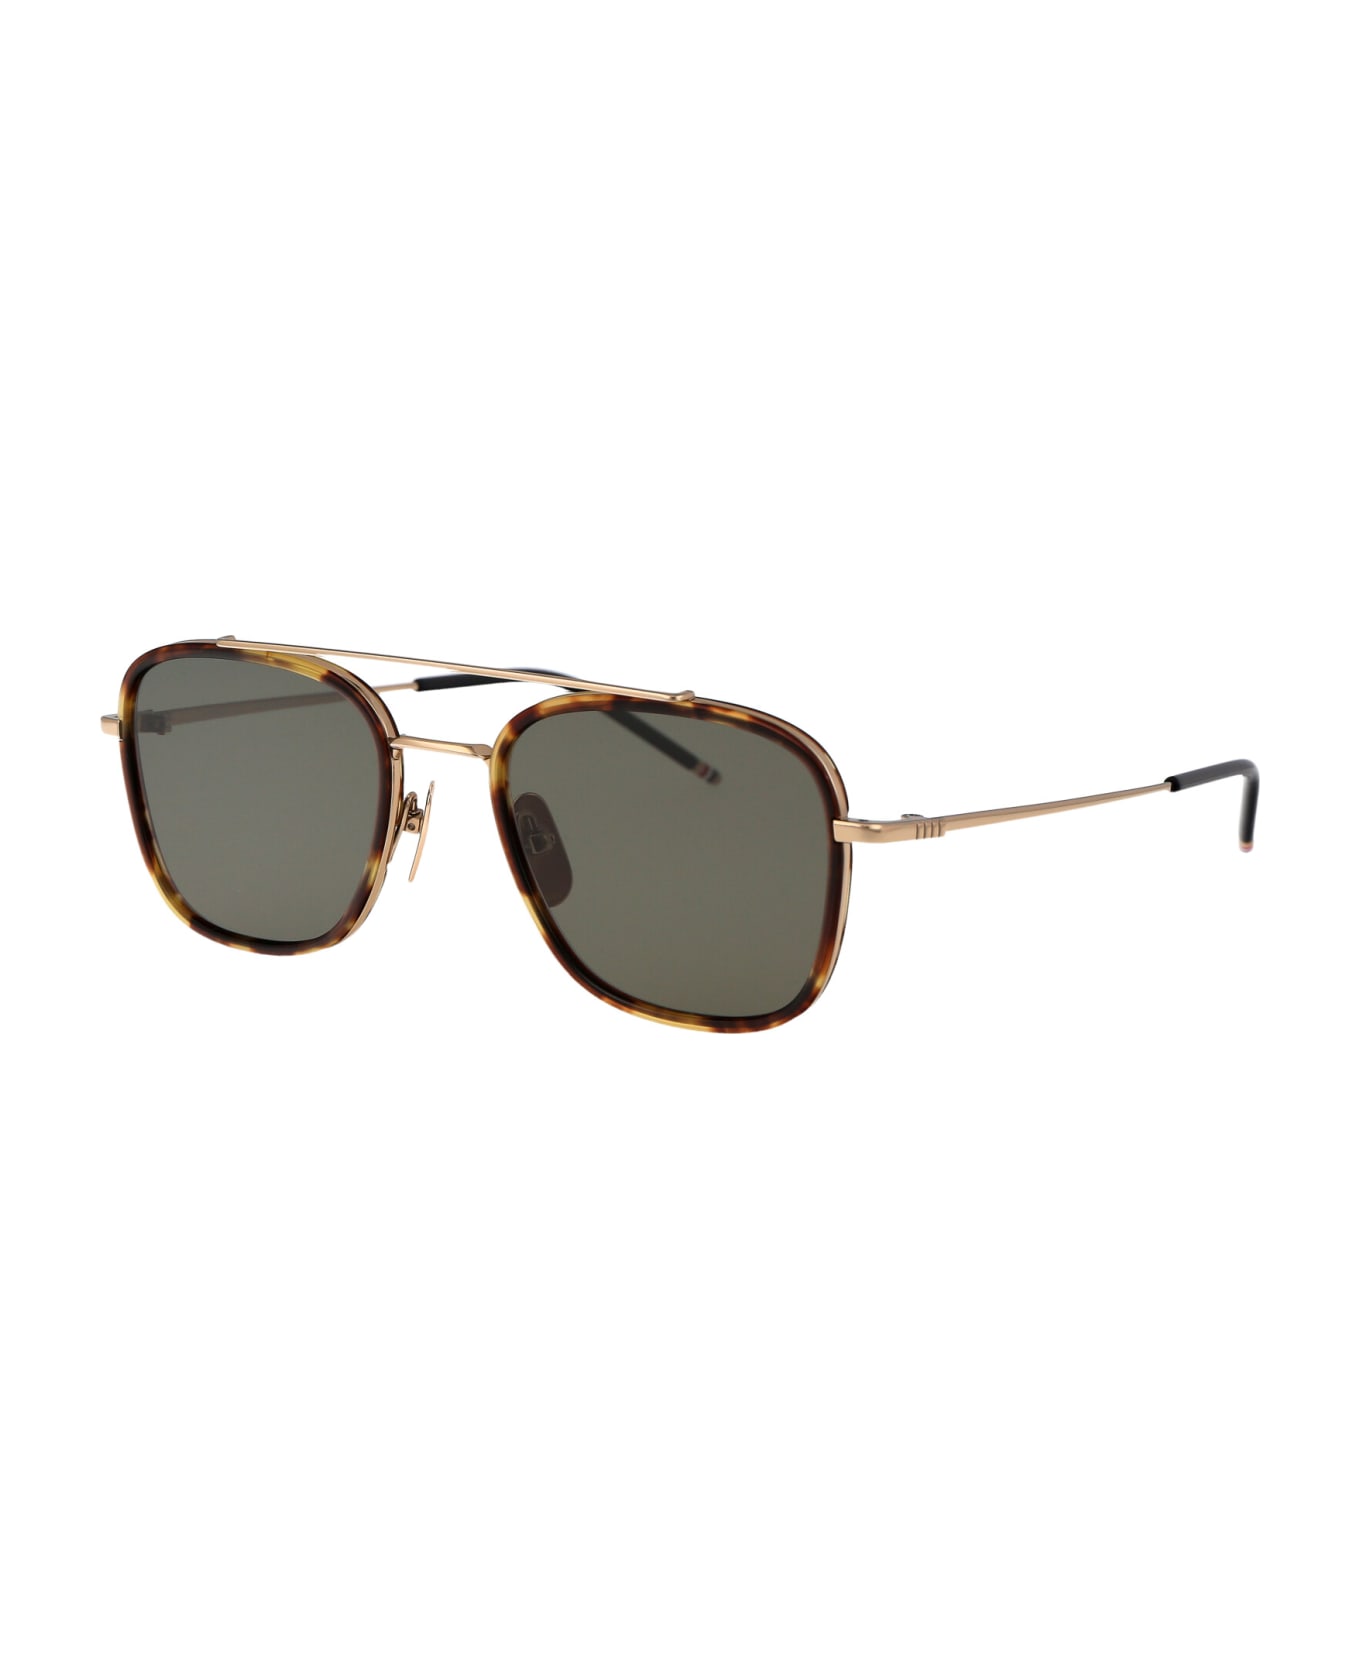 Thom Browne Ues800a-g0003-215-51 Sunglasses - 215 MED サングラス